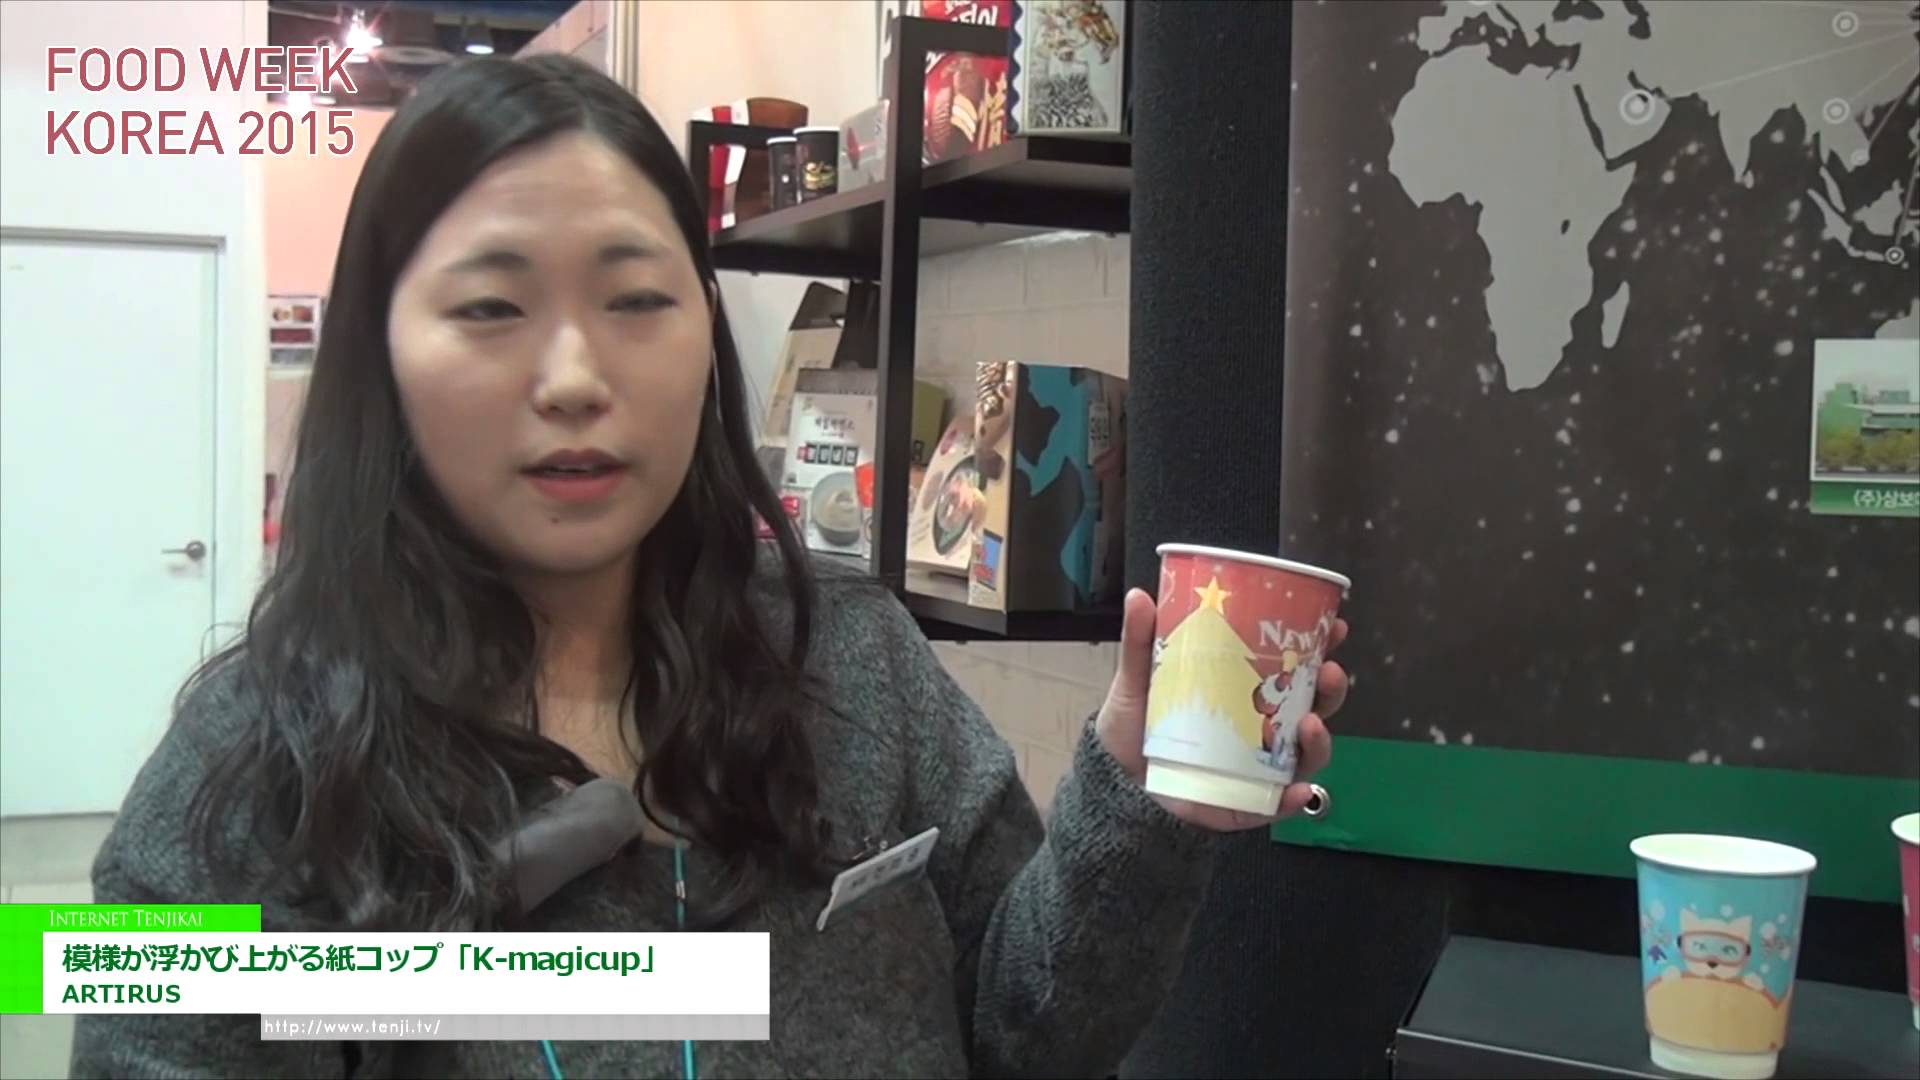 [Food Week Korea 2015] 模様が浮かび上がる紙コップ「K-magicup」 - ARTIRUS